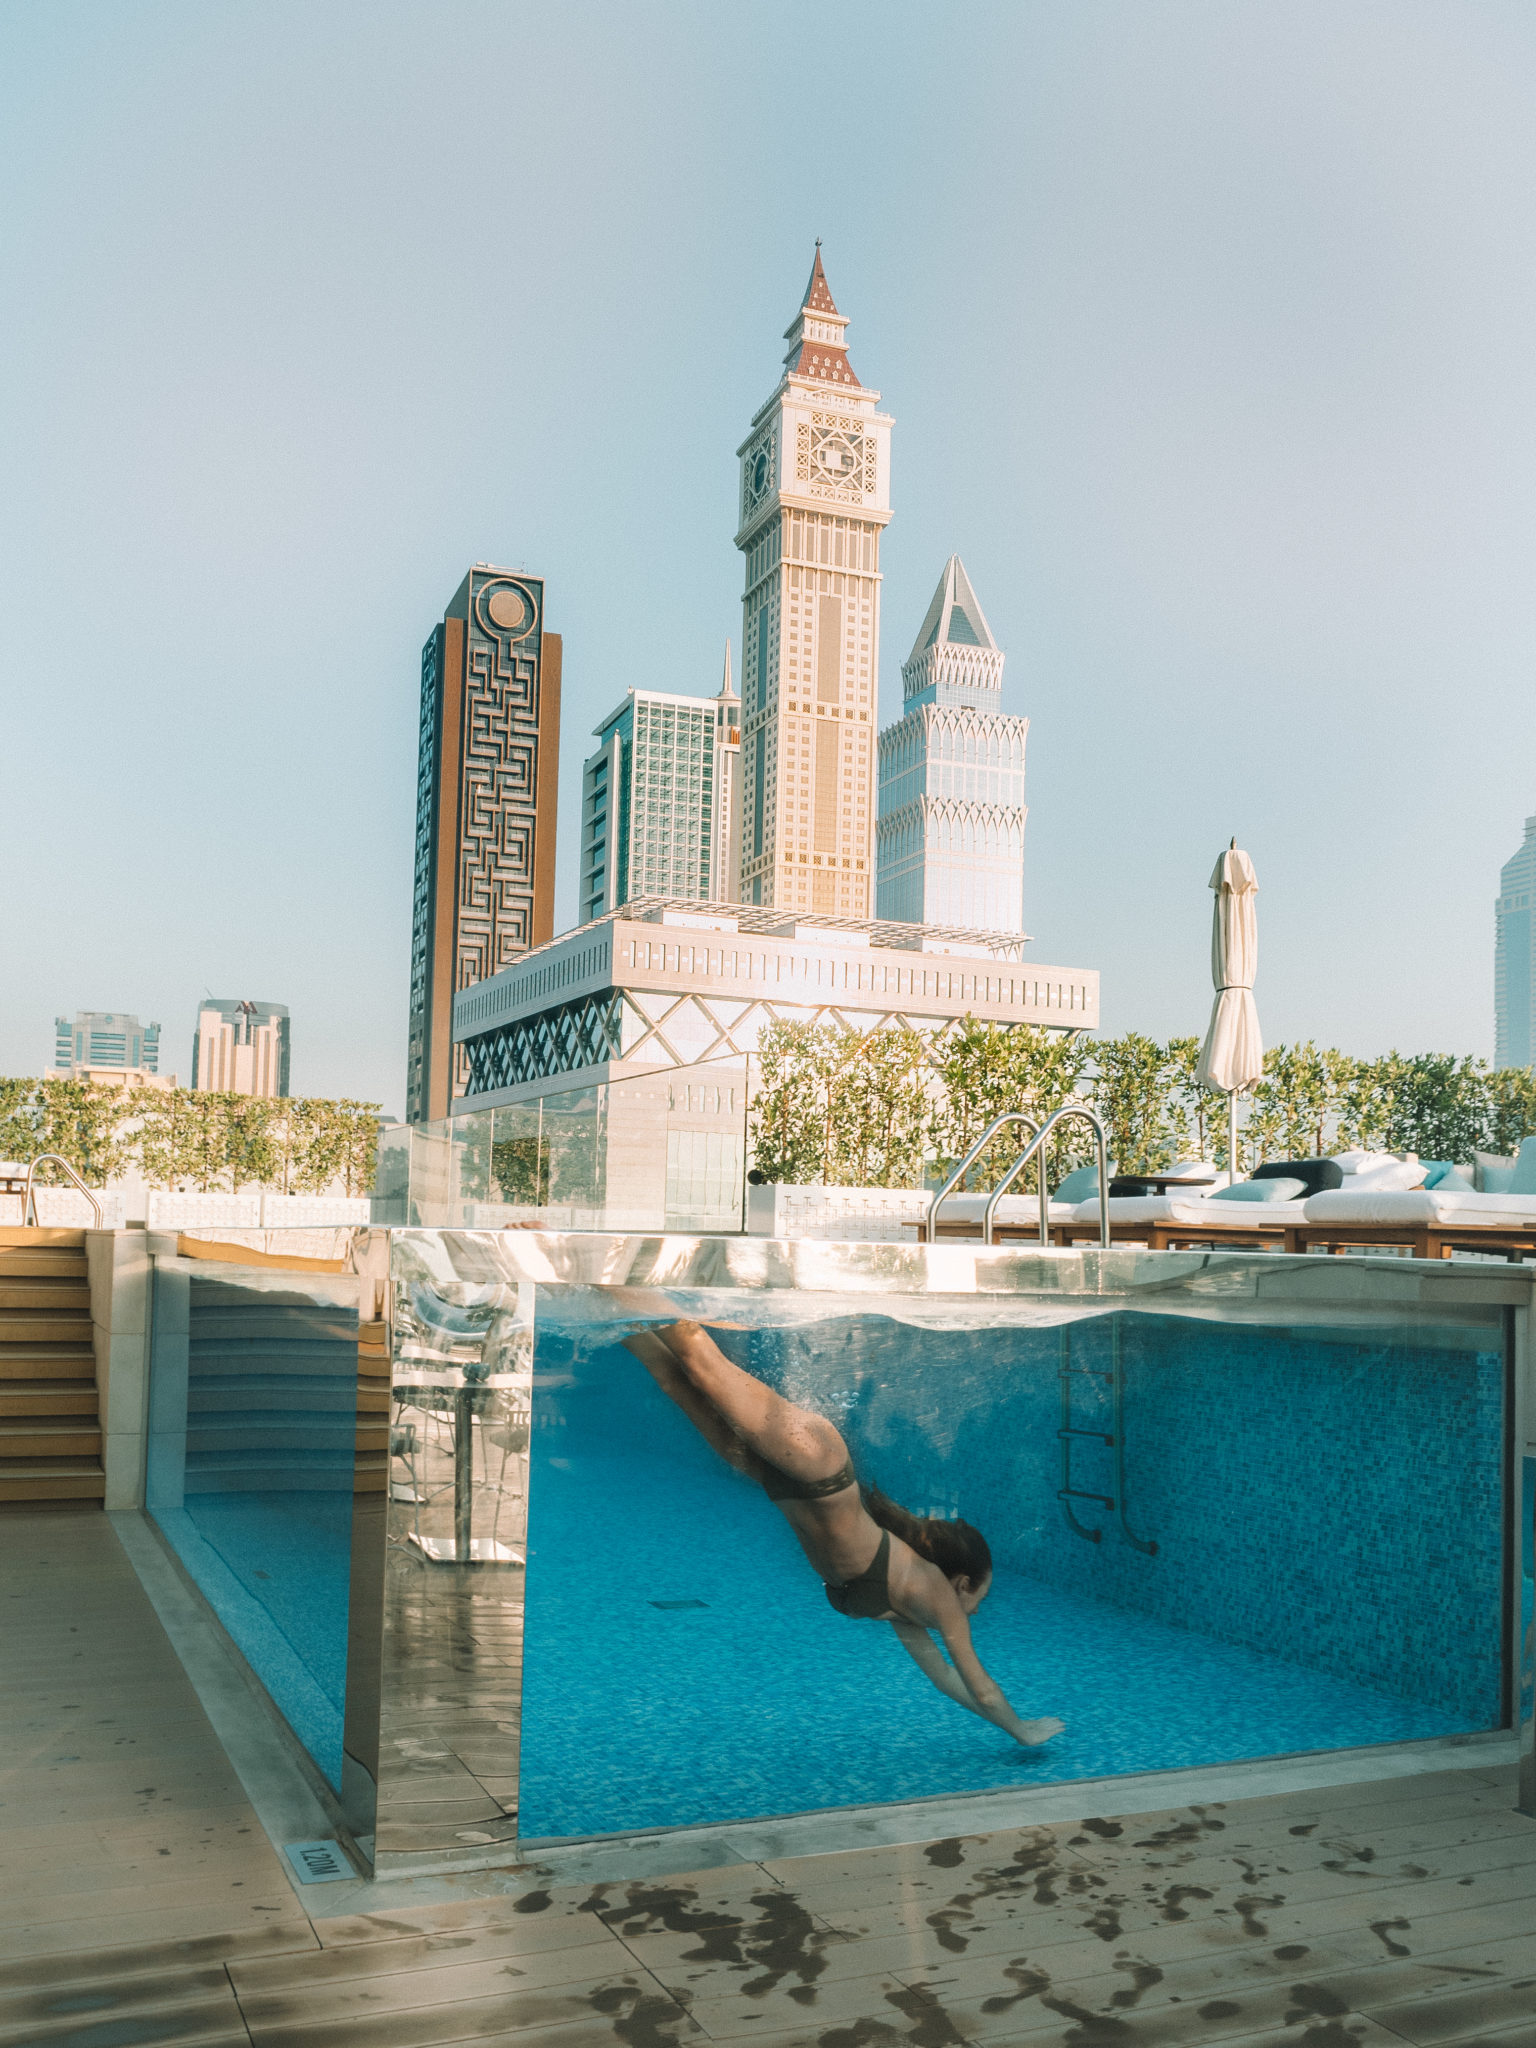 Great place to take Instagram photos in Dubai | Wonderlast World